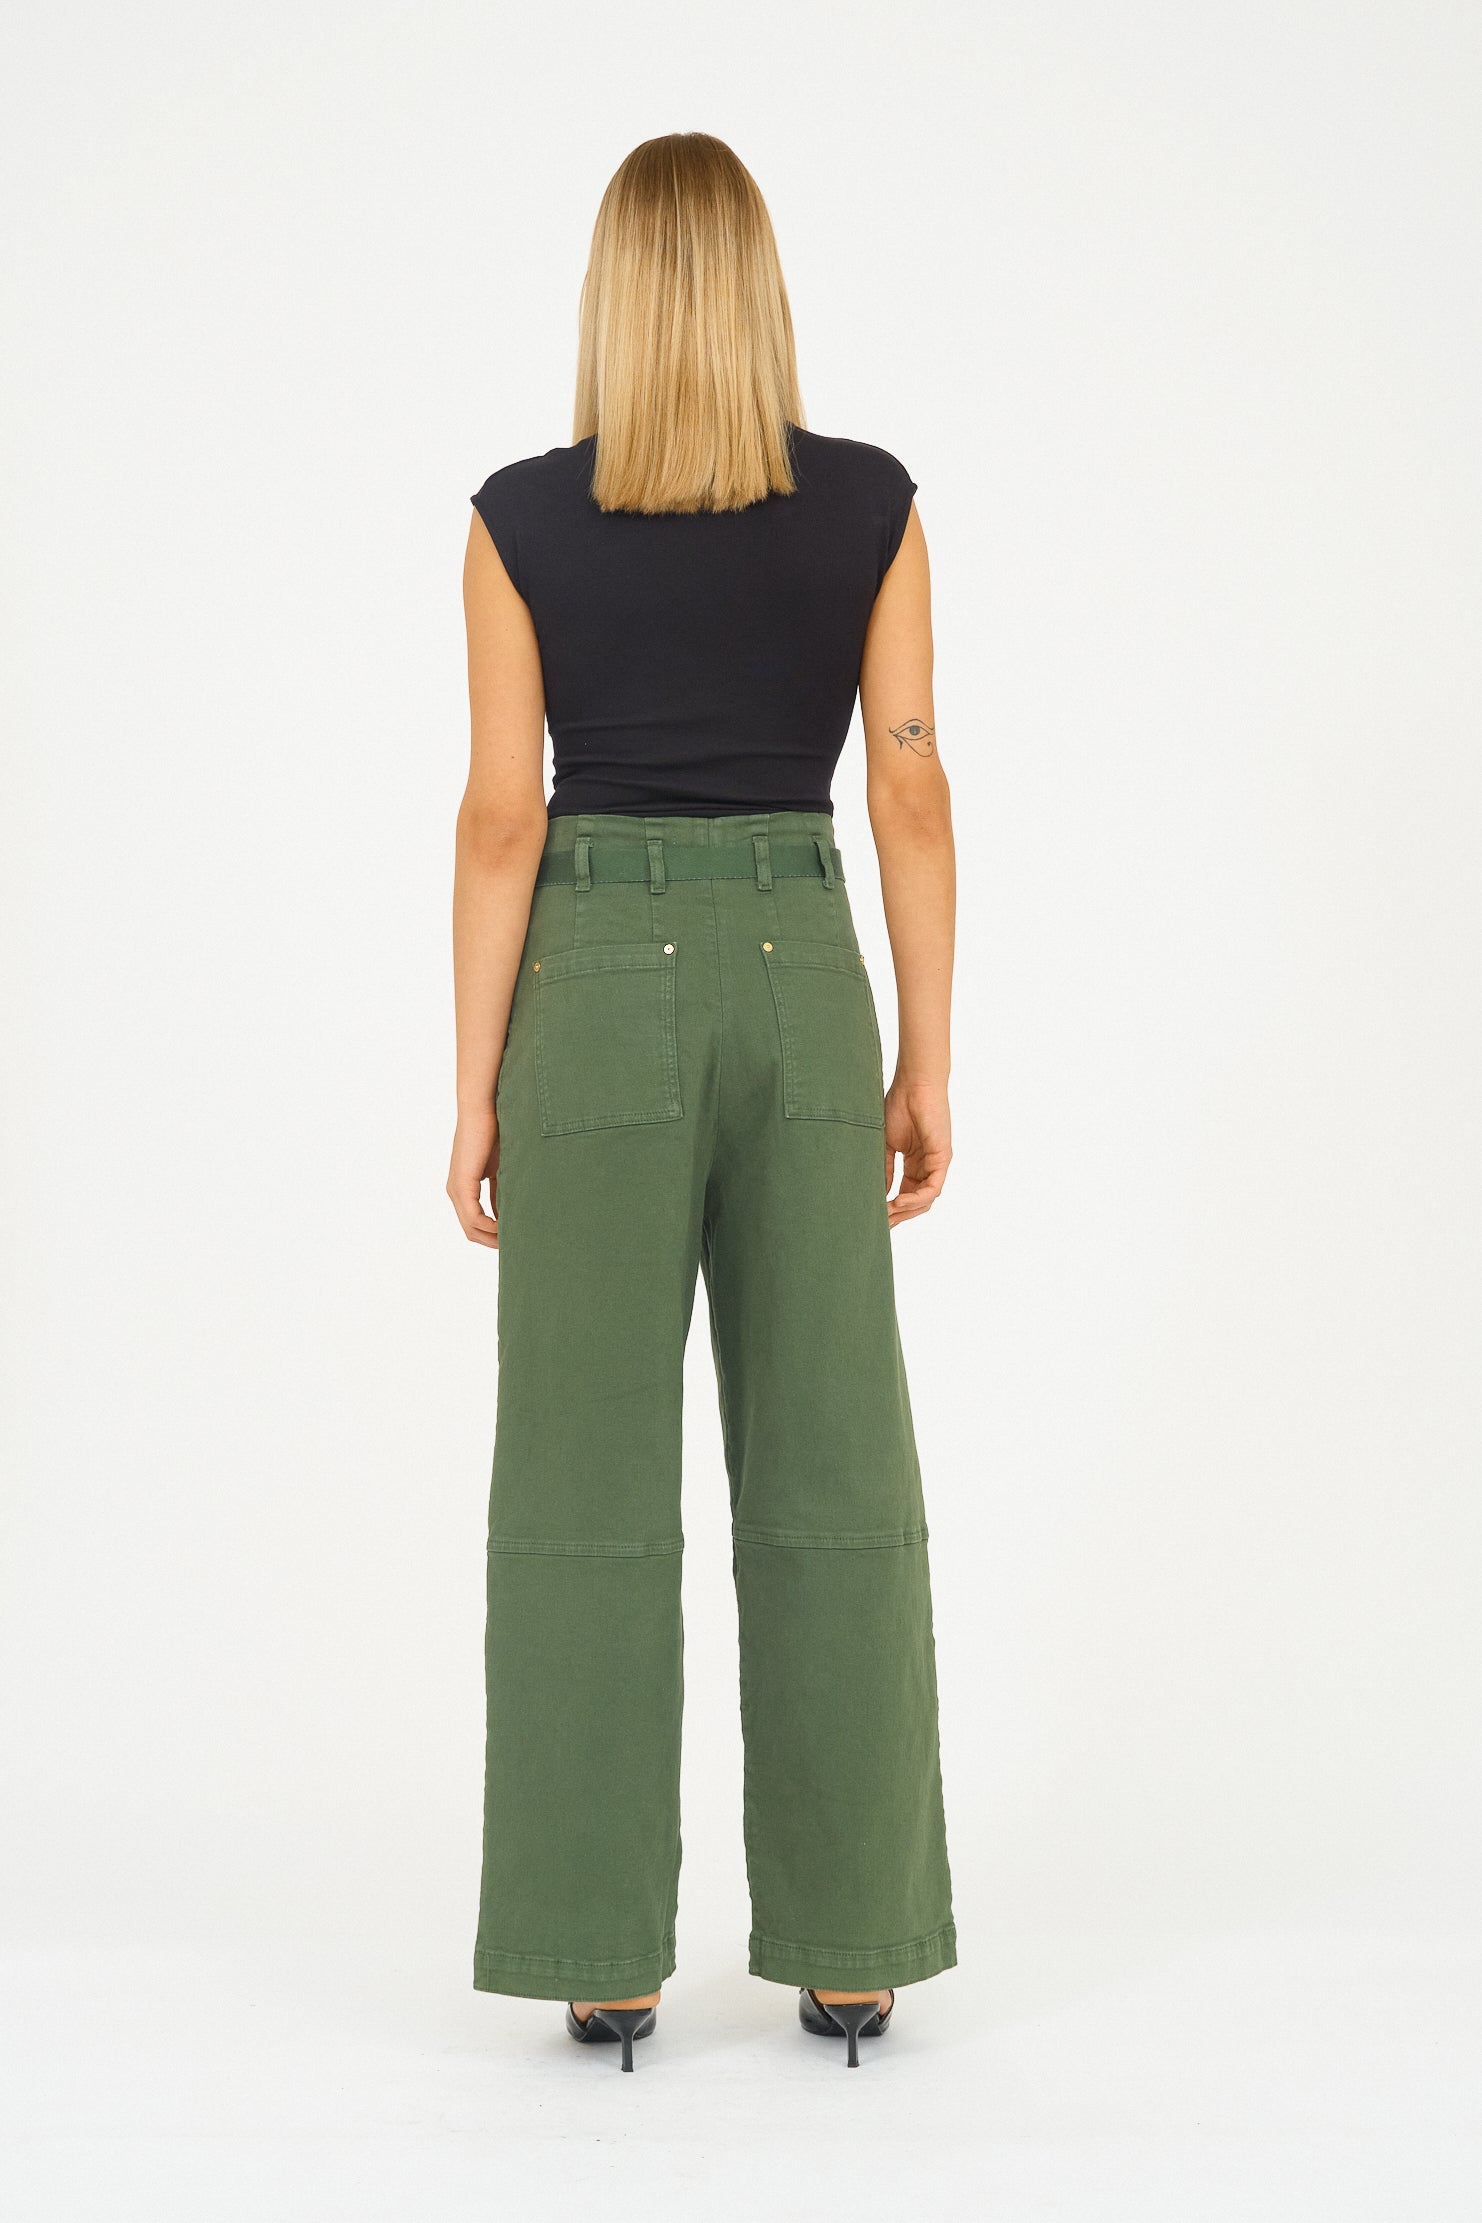 IVY Copenhagen IVY-Tessa Worker Pant Fresh Army Green Jeans & Pants 674 Fresh Army Green